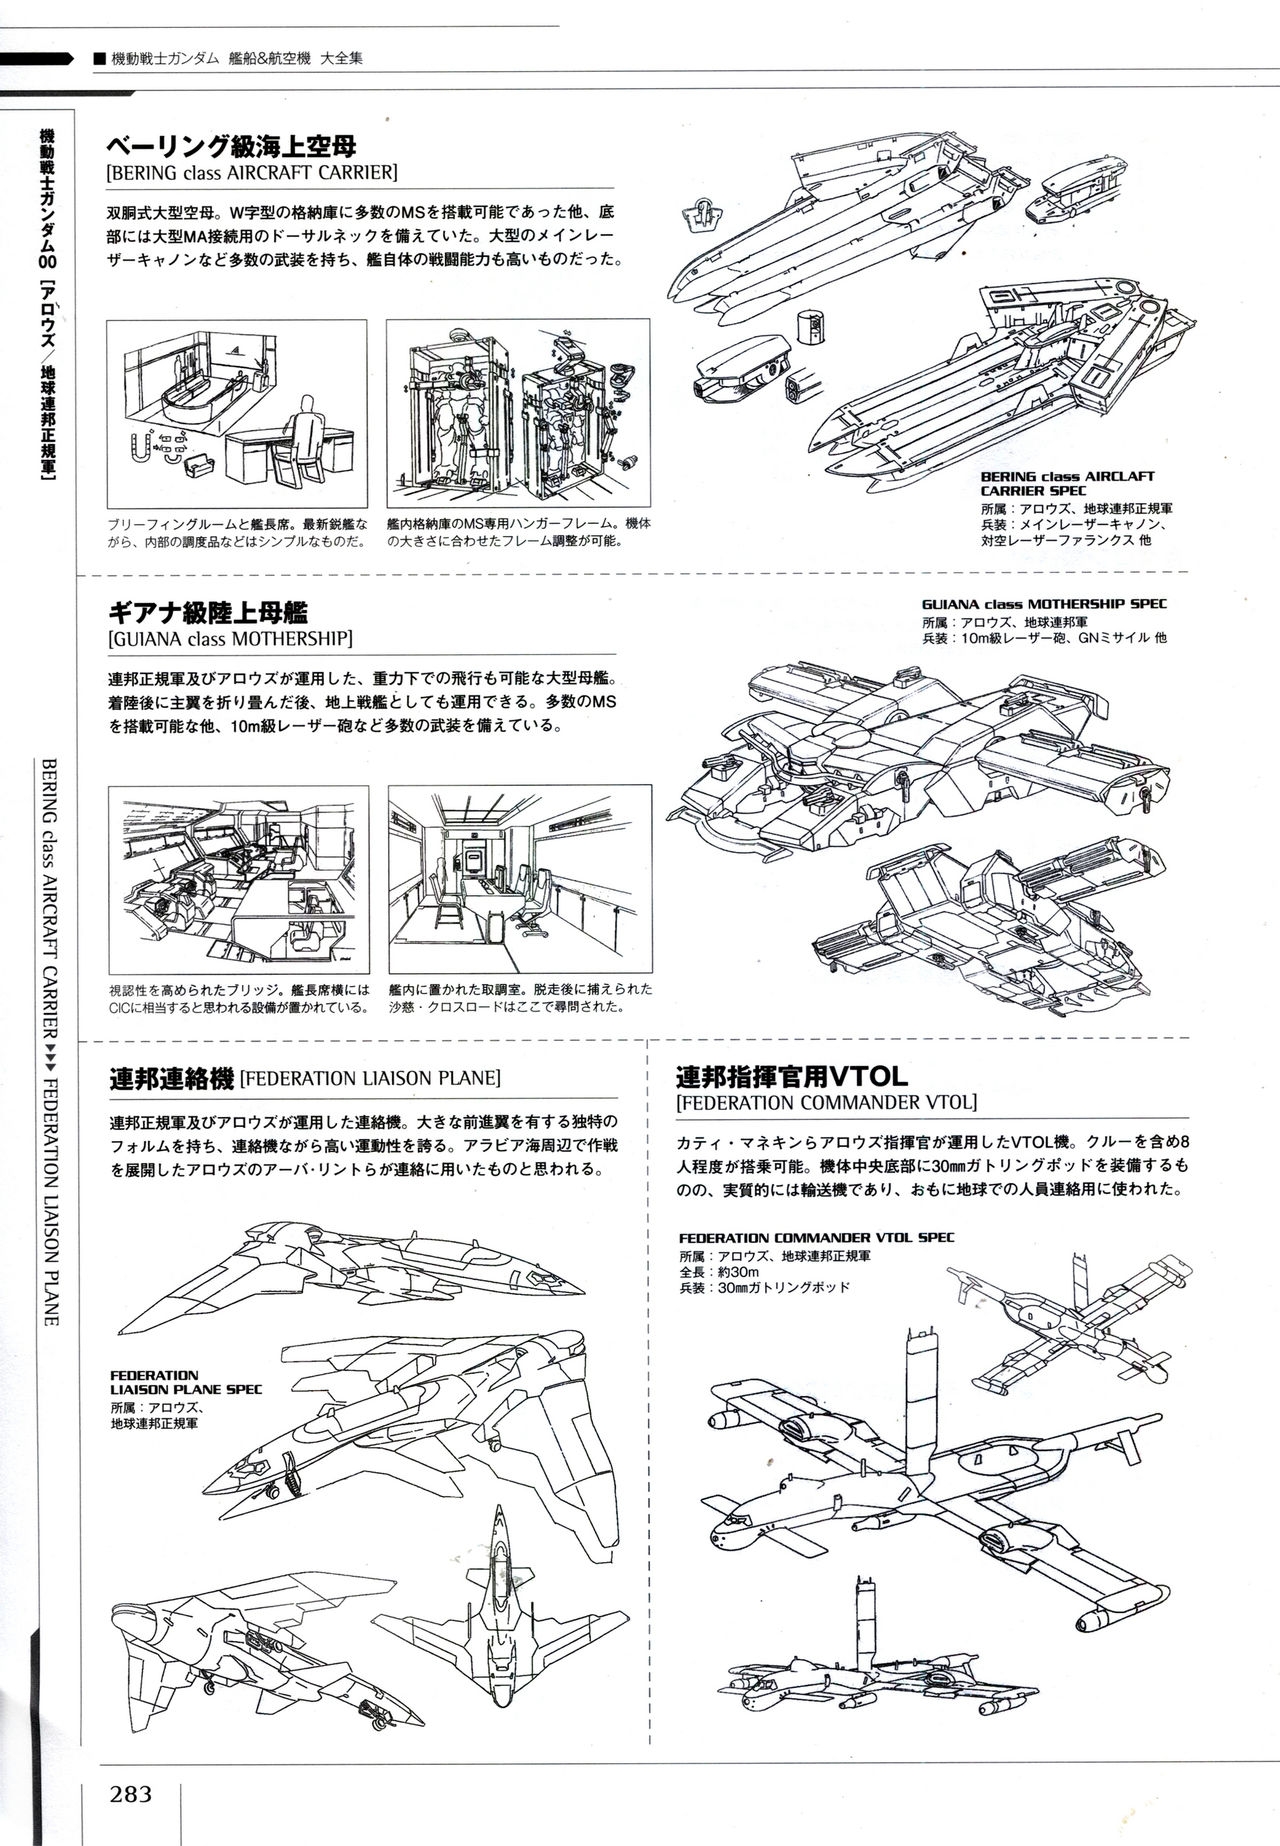 Mobile Suit Gundam - Ship & Aerospace Plane Encyclopedia - Revised Edition 288